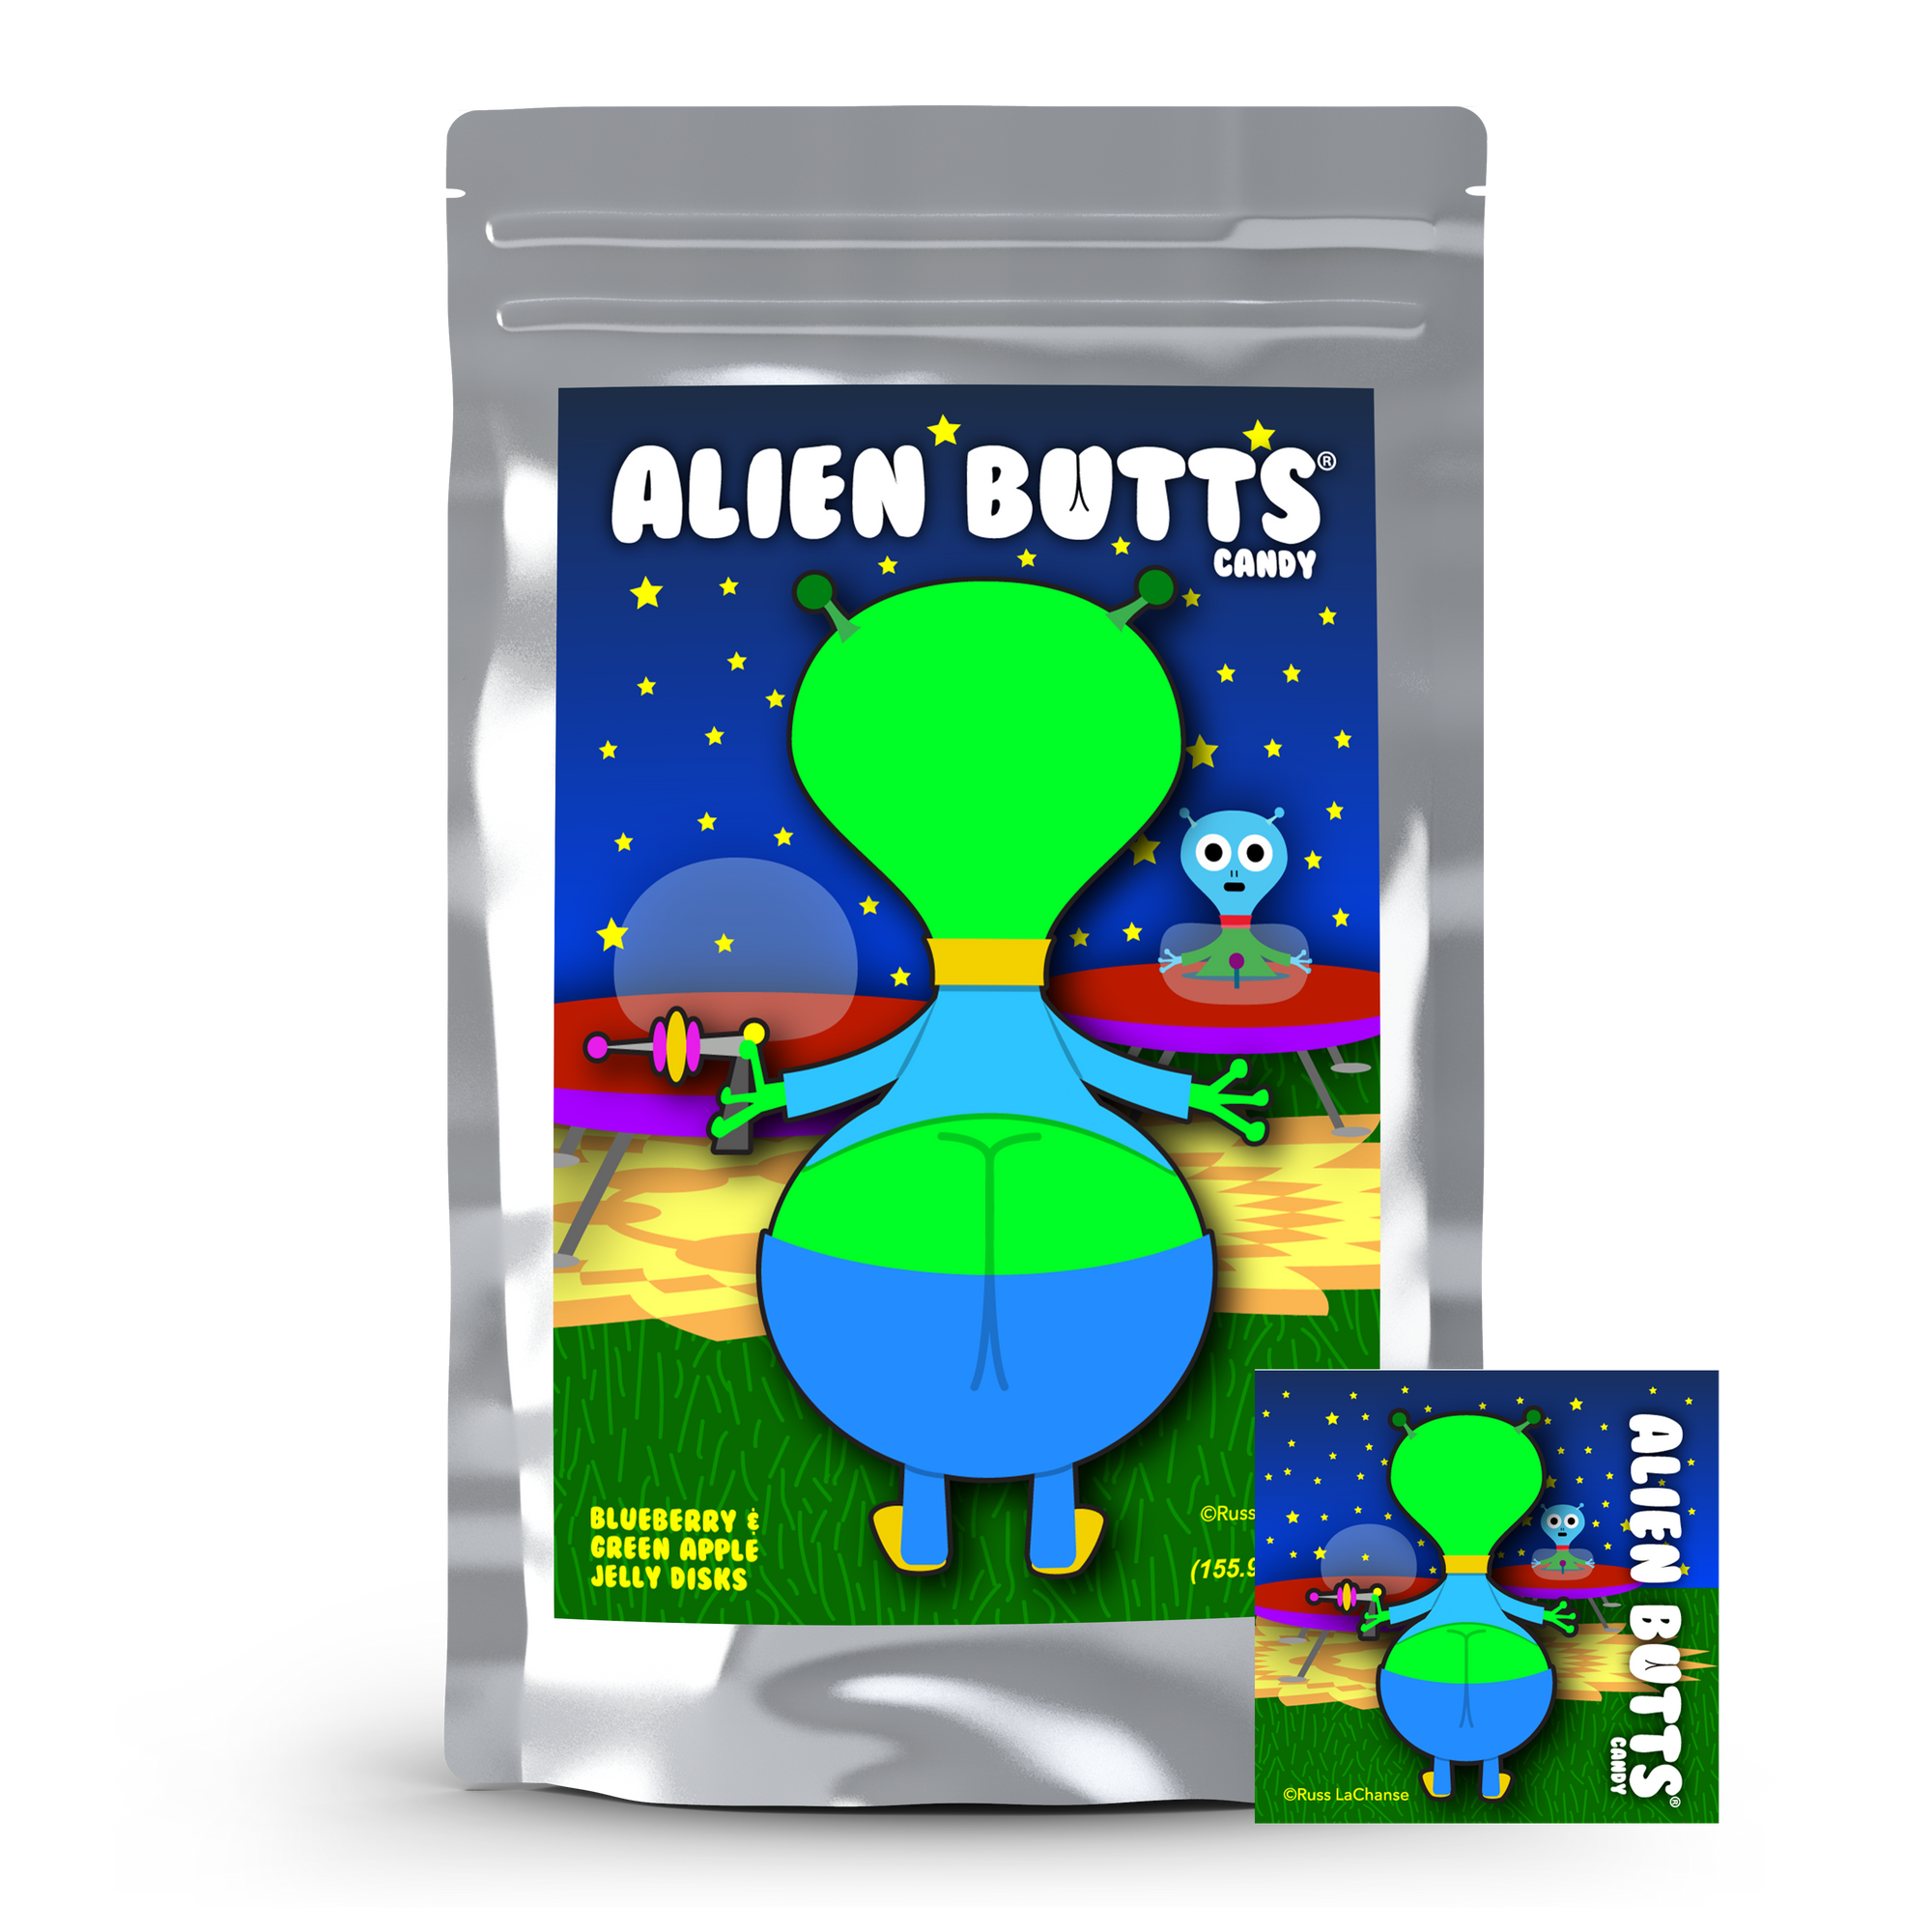 Alien Butts